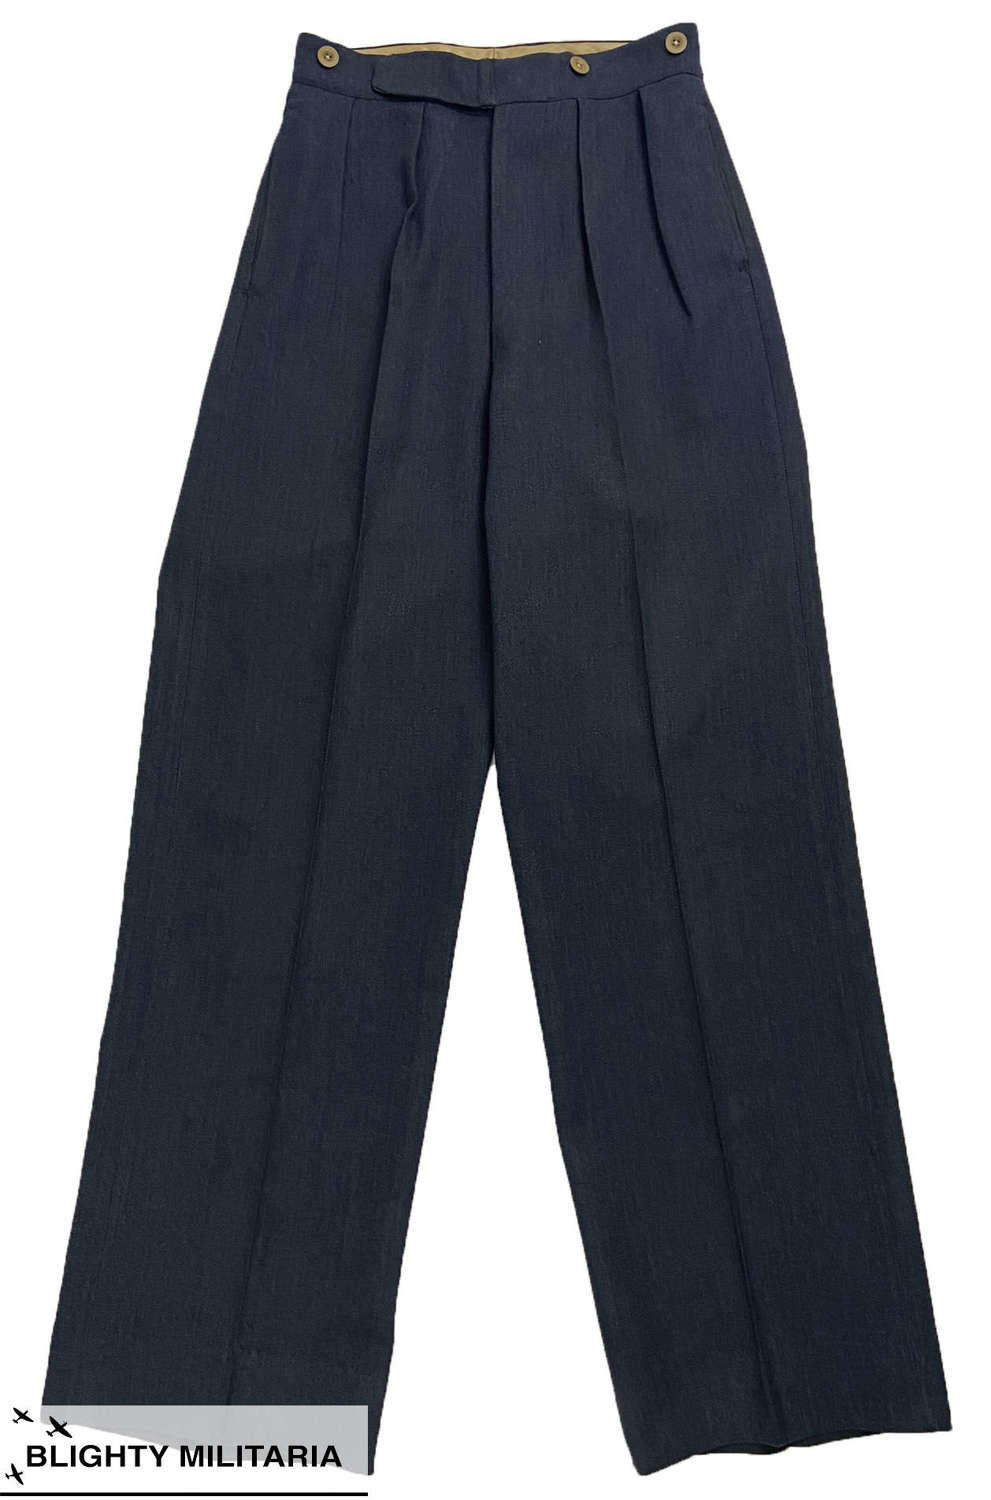 Original 1940s RAF Officer's Service Dress Trousers - Size 27x31